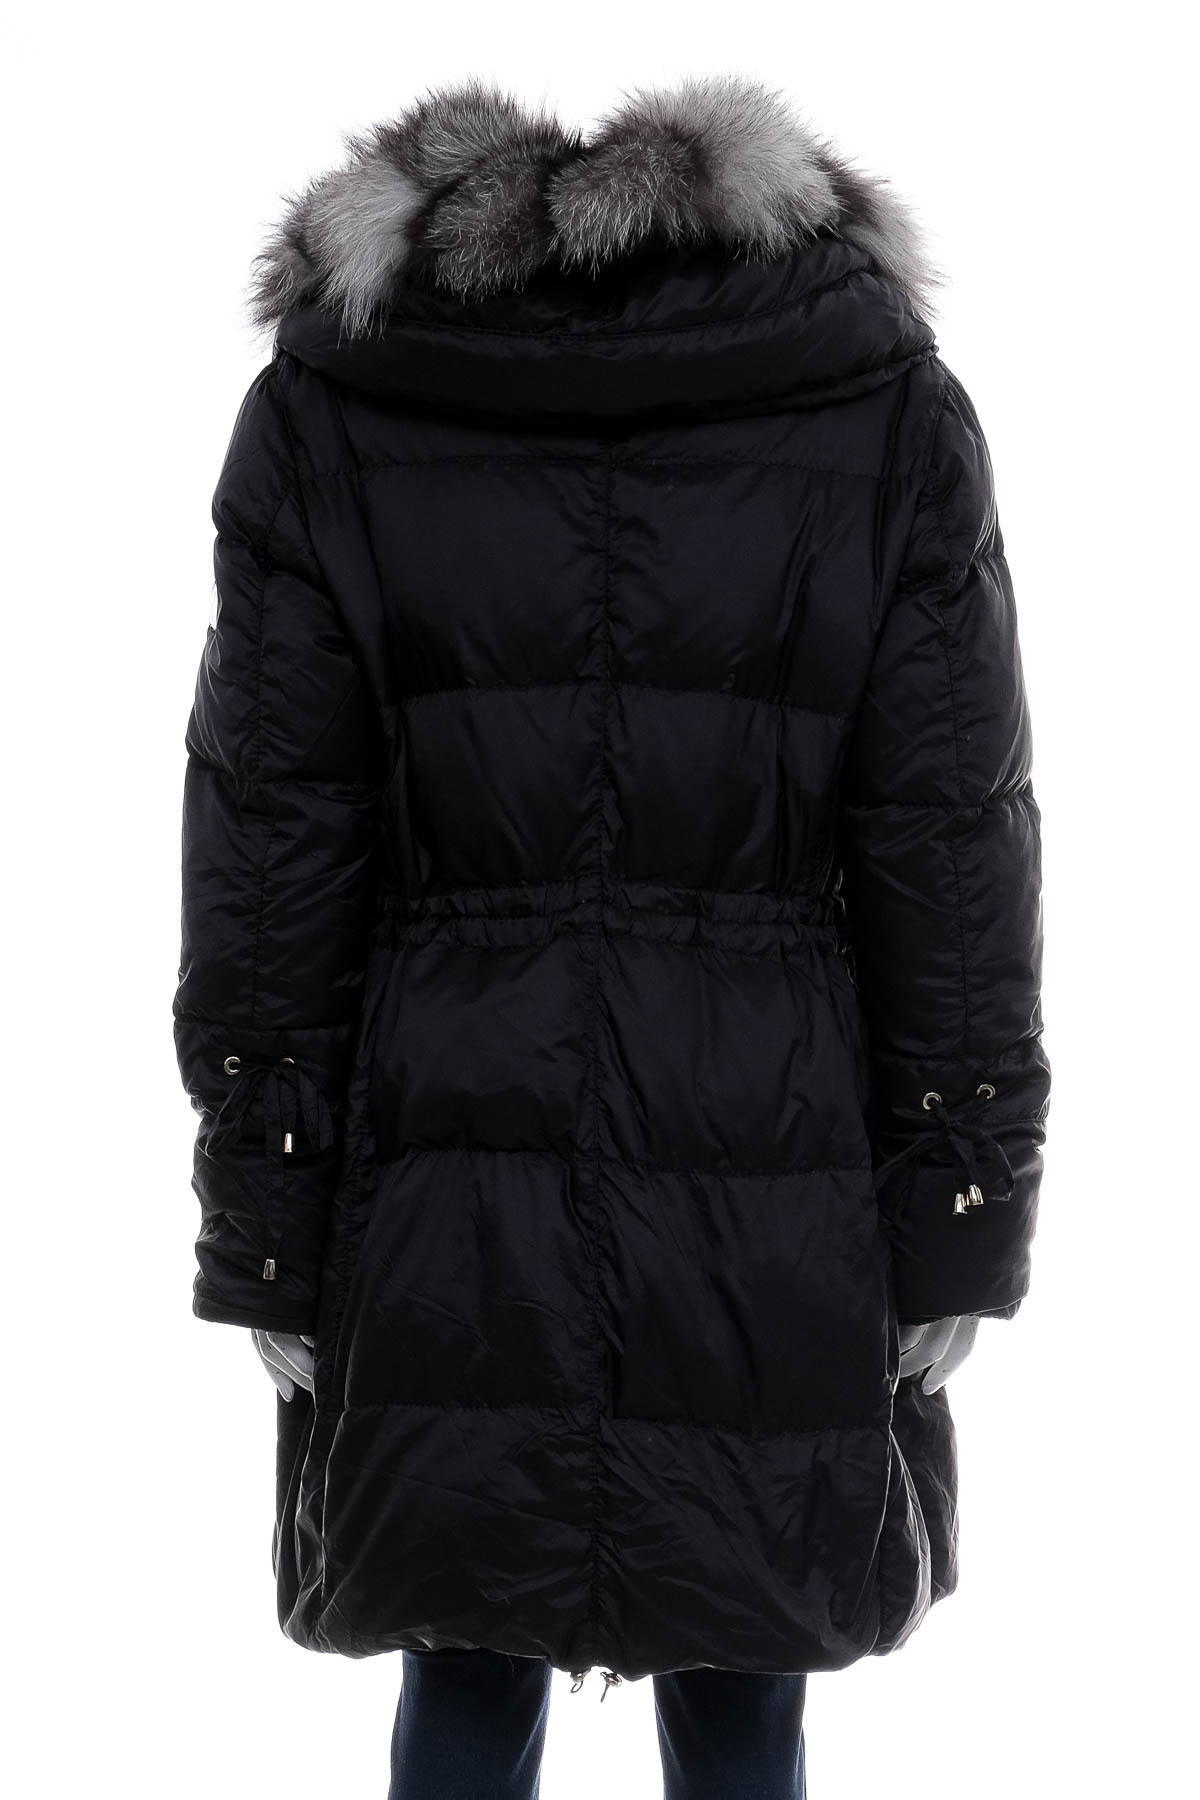 Female jacket - GORSKI MONTREAL - 1